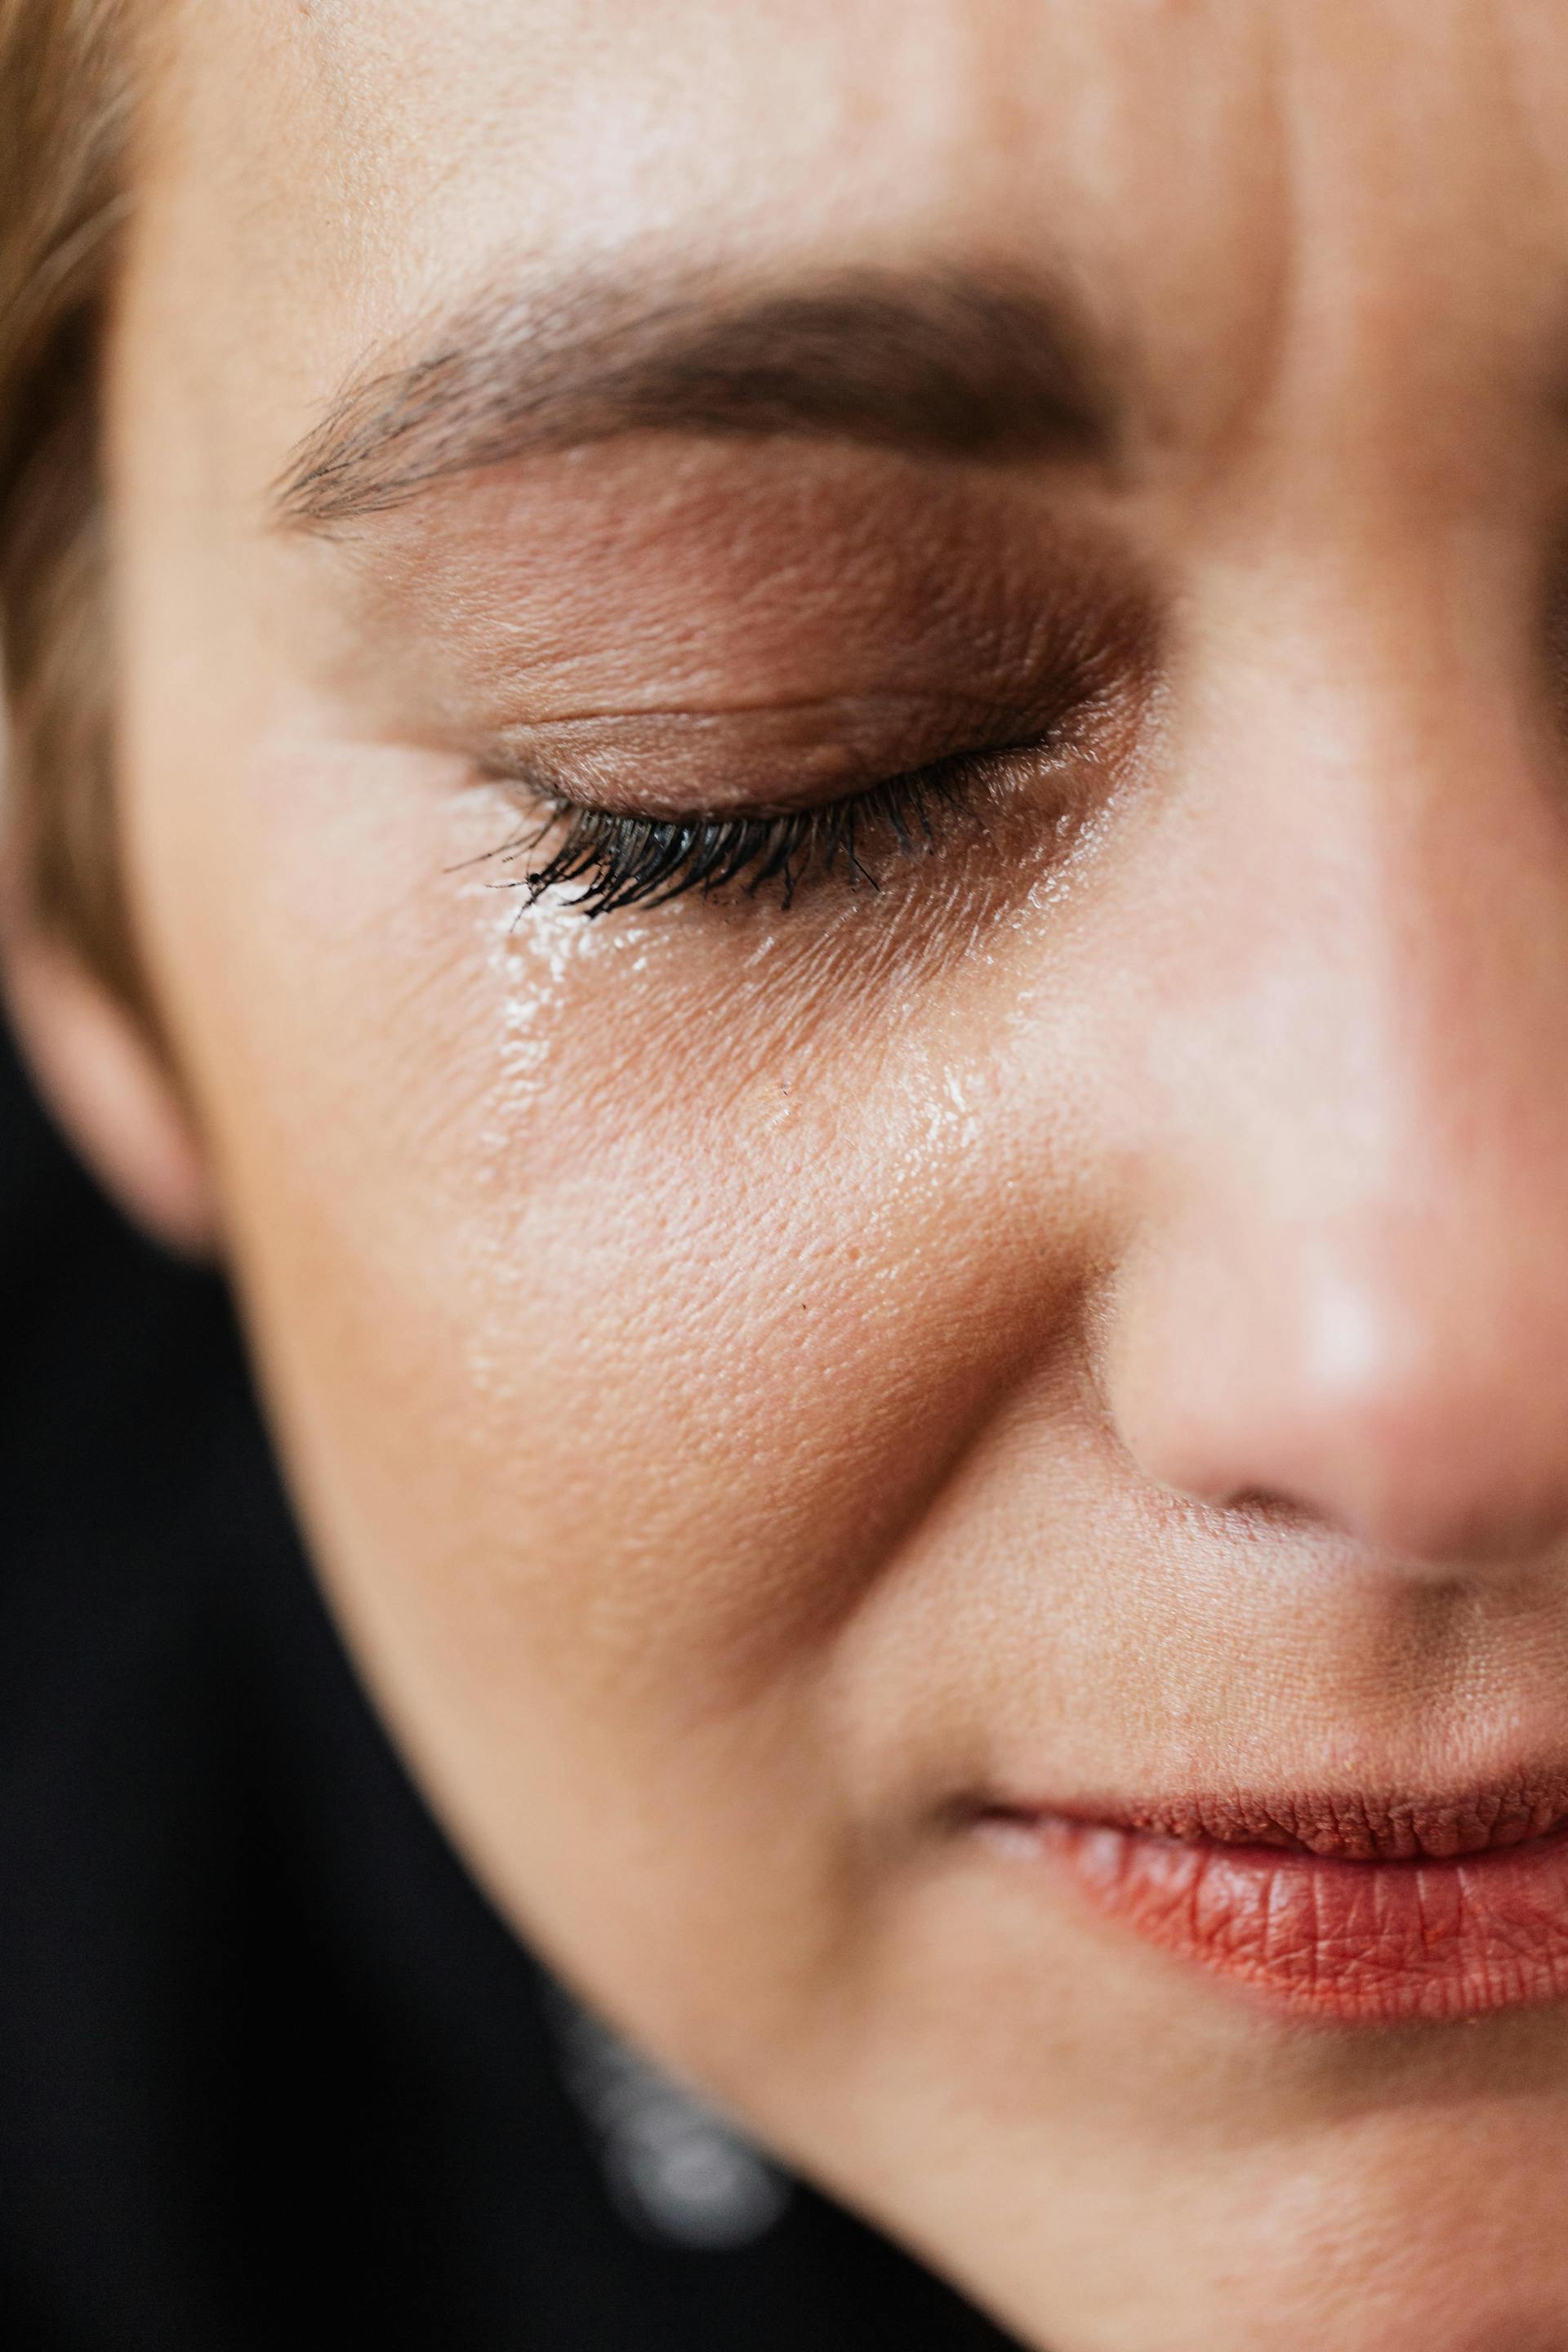 A sad, teary-eyed woman | Source: Pexels